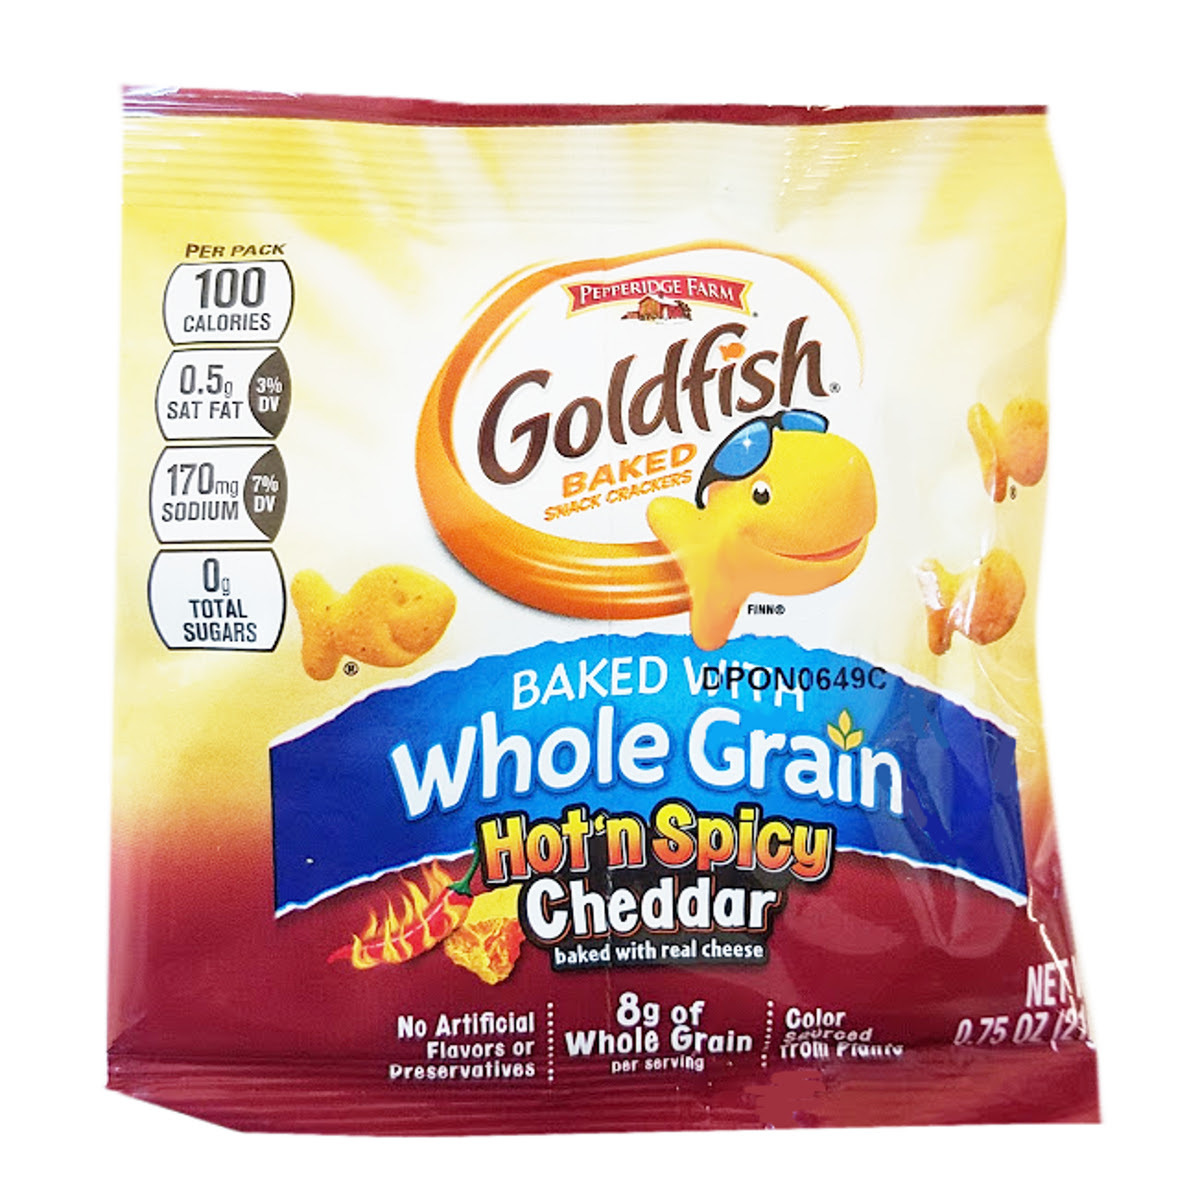 flavor blasted goldfish